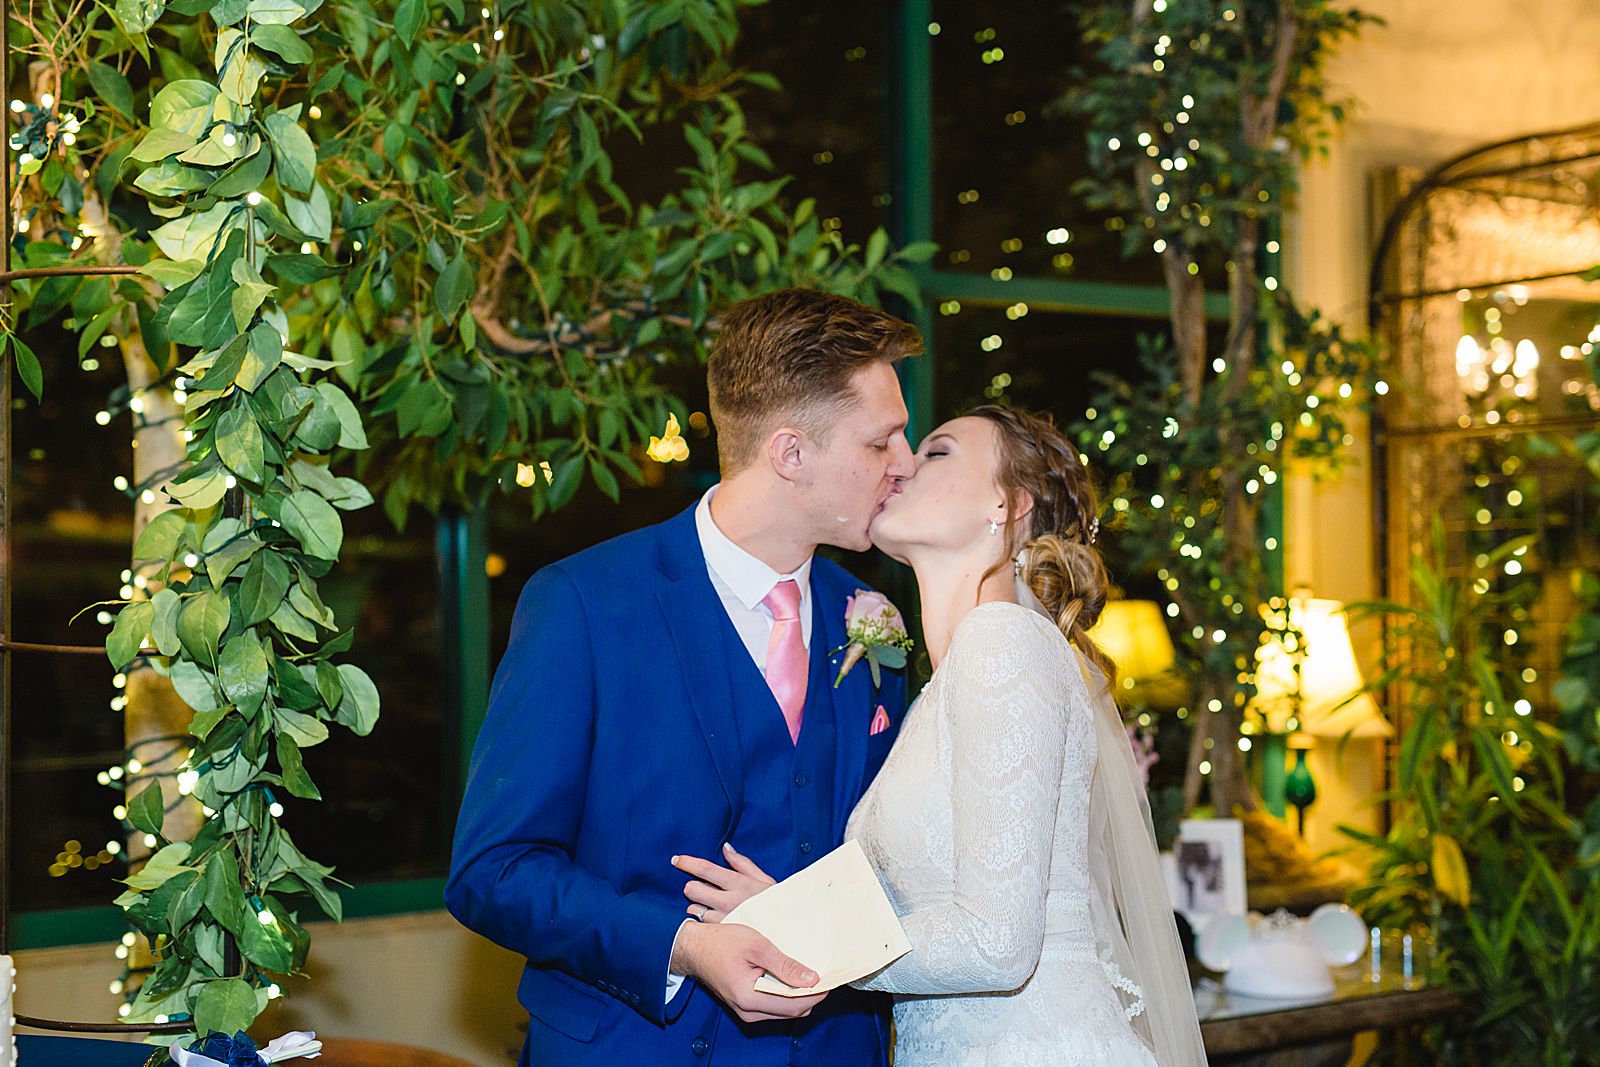 Utah Winter Bride | Cake Cutting | Wedding Reception 